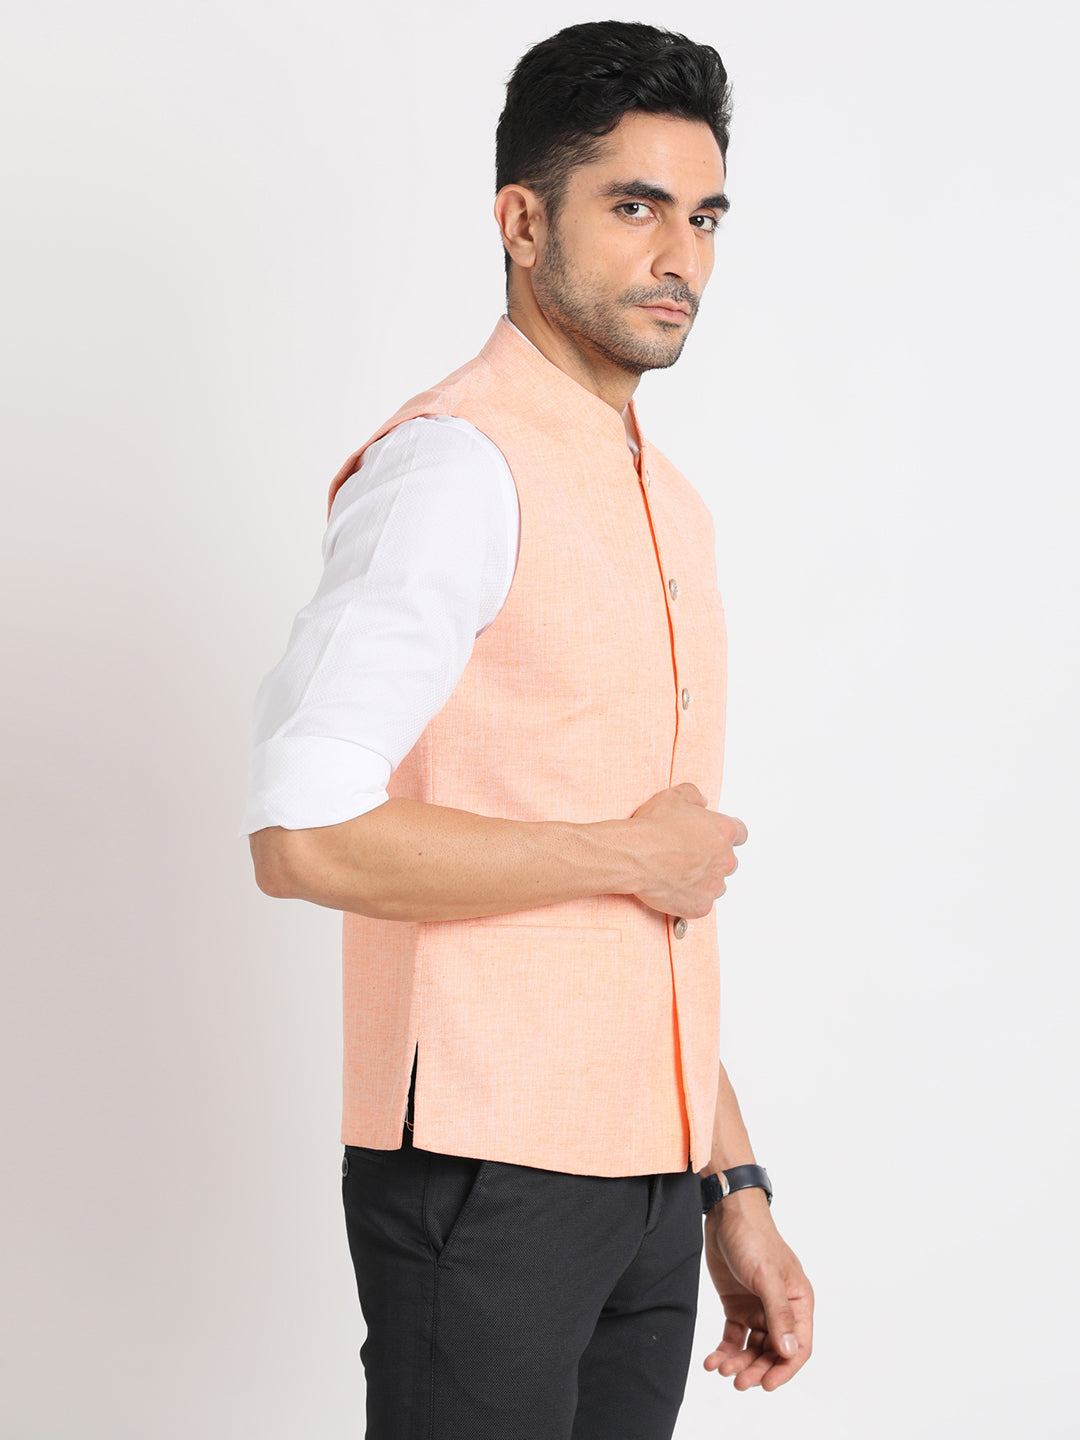 Poly Cotton Peach Plain Nehru Jacket Sleeveless Formal Nehru Jacket